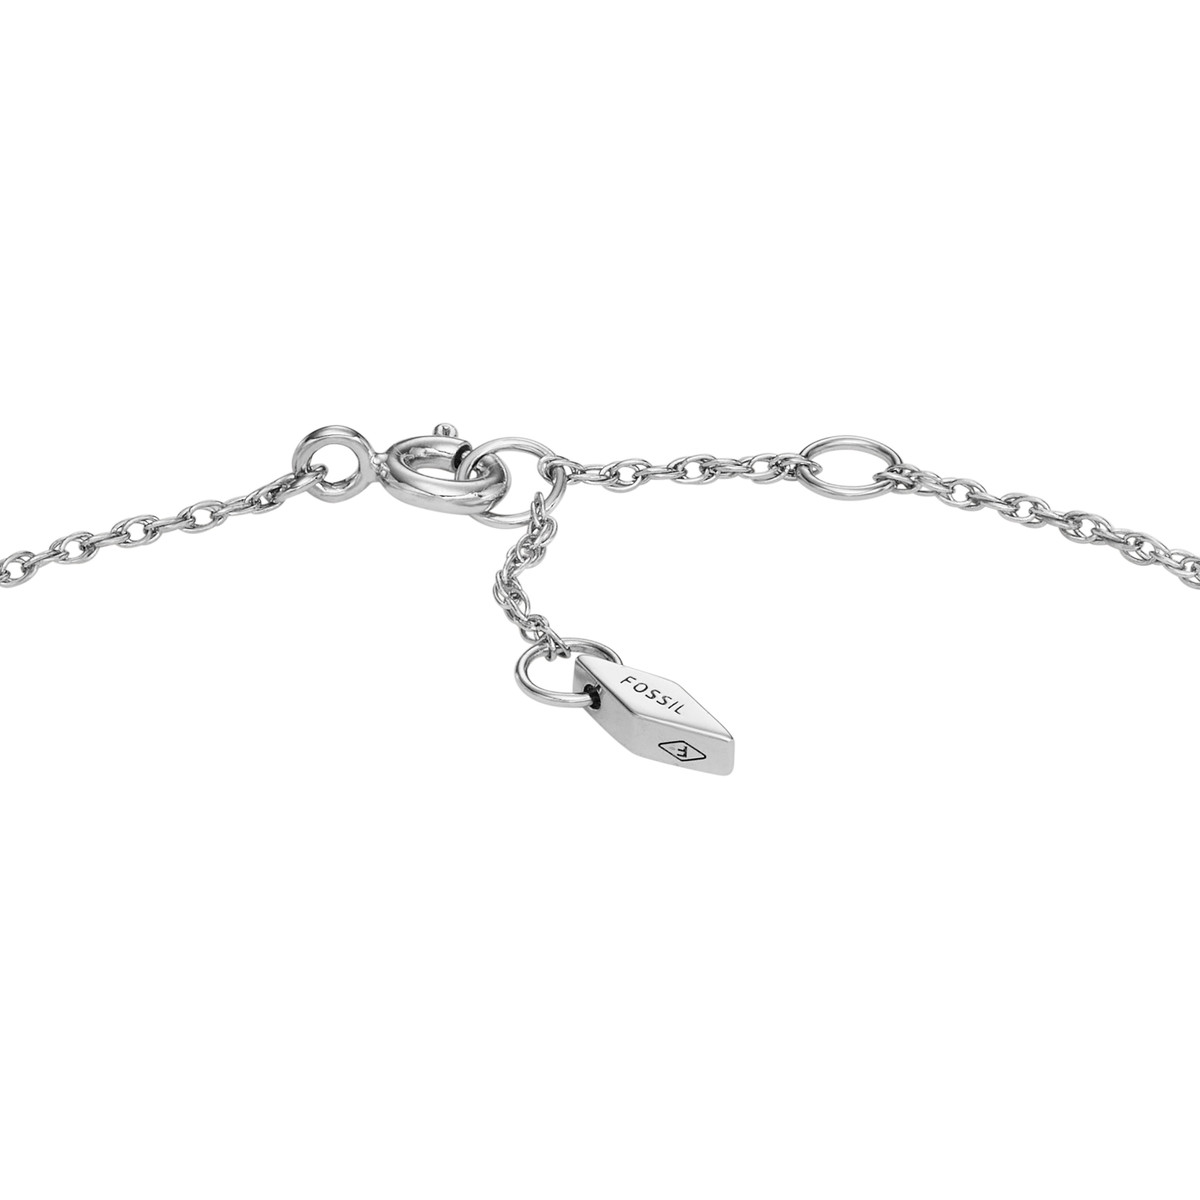 Bracelet FOSSIL argent 925 cadenas et zirconias 19 cm - vue 3